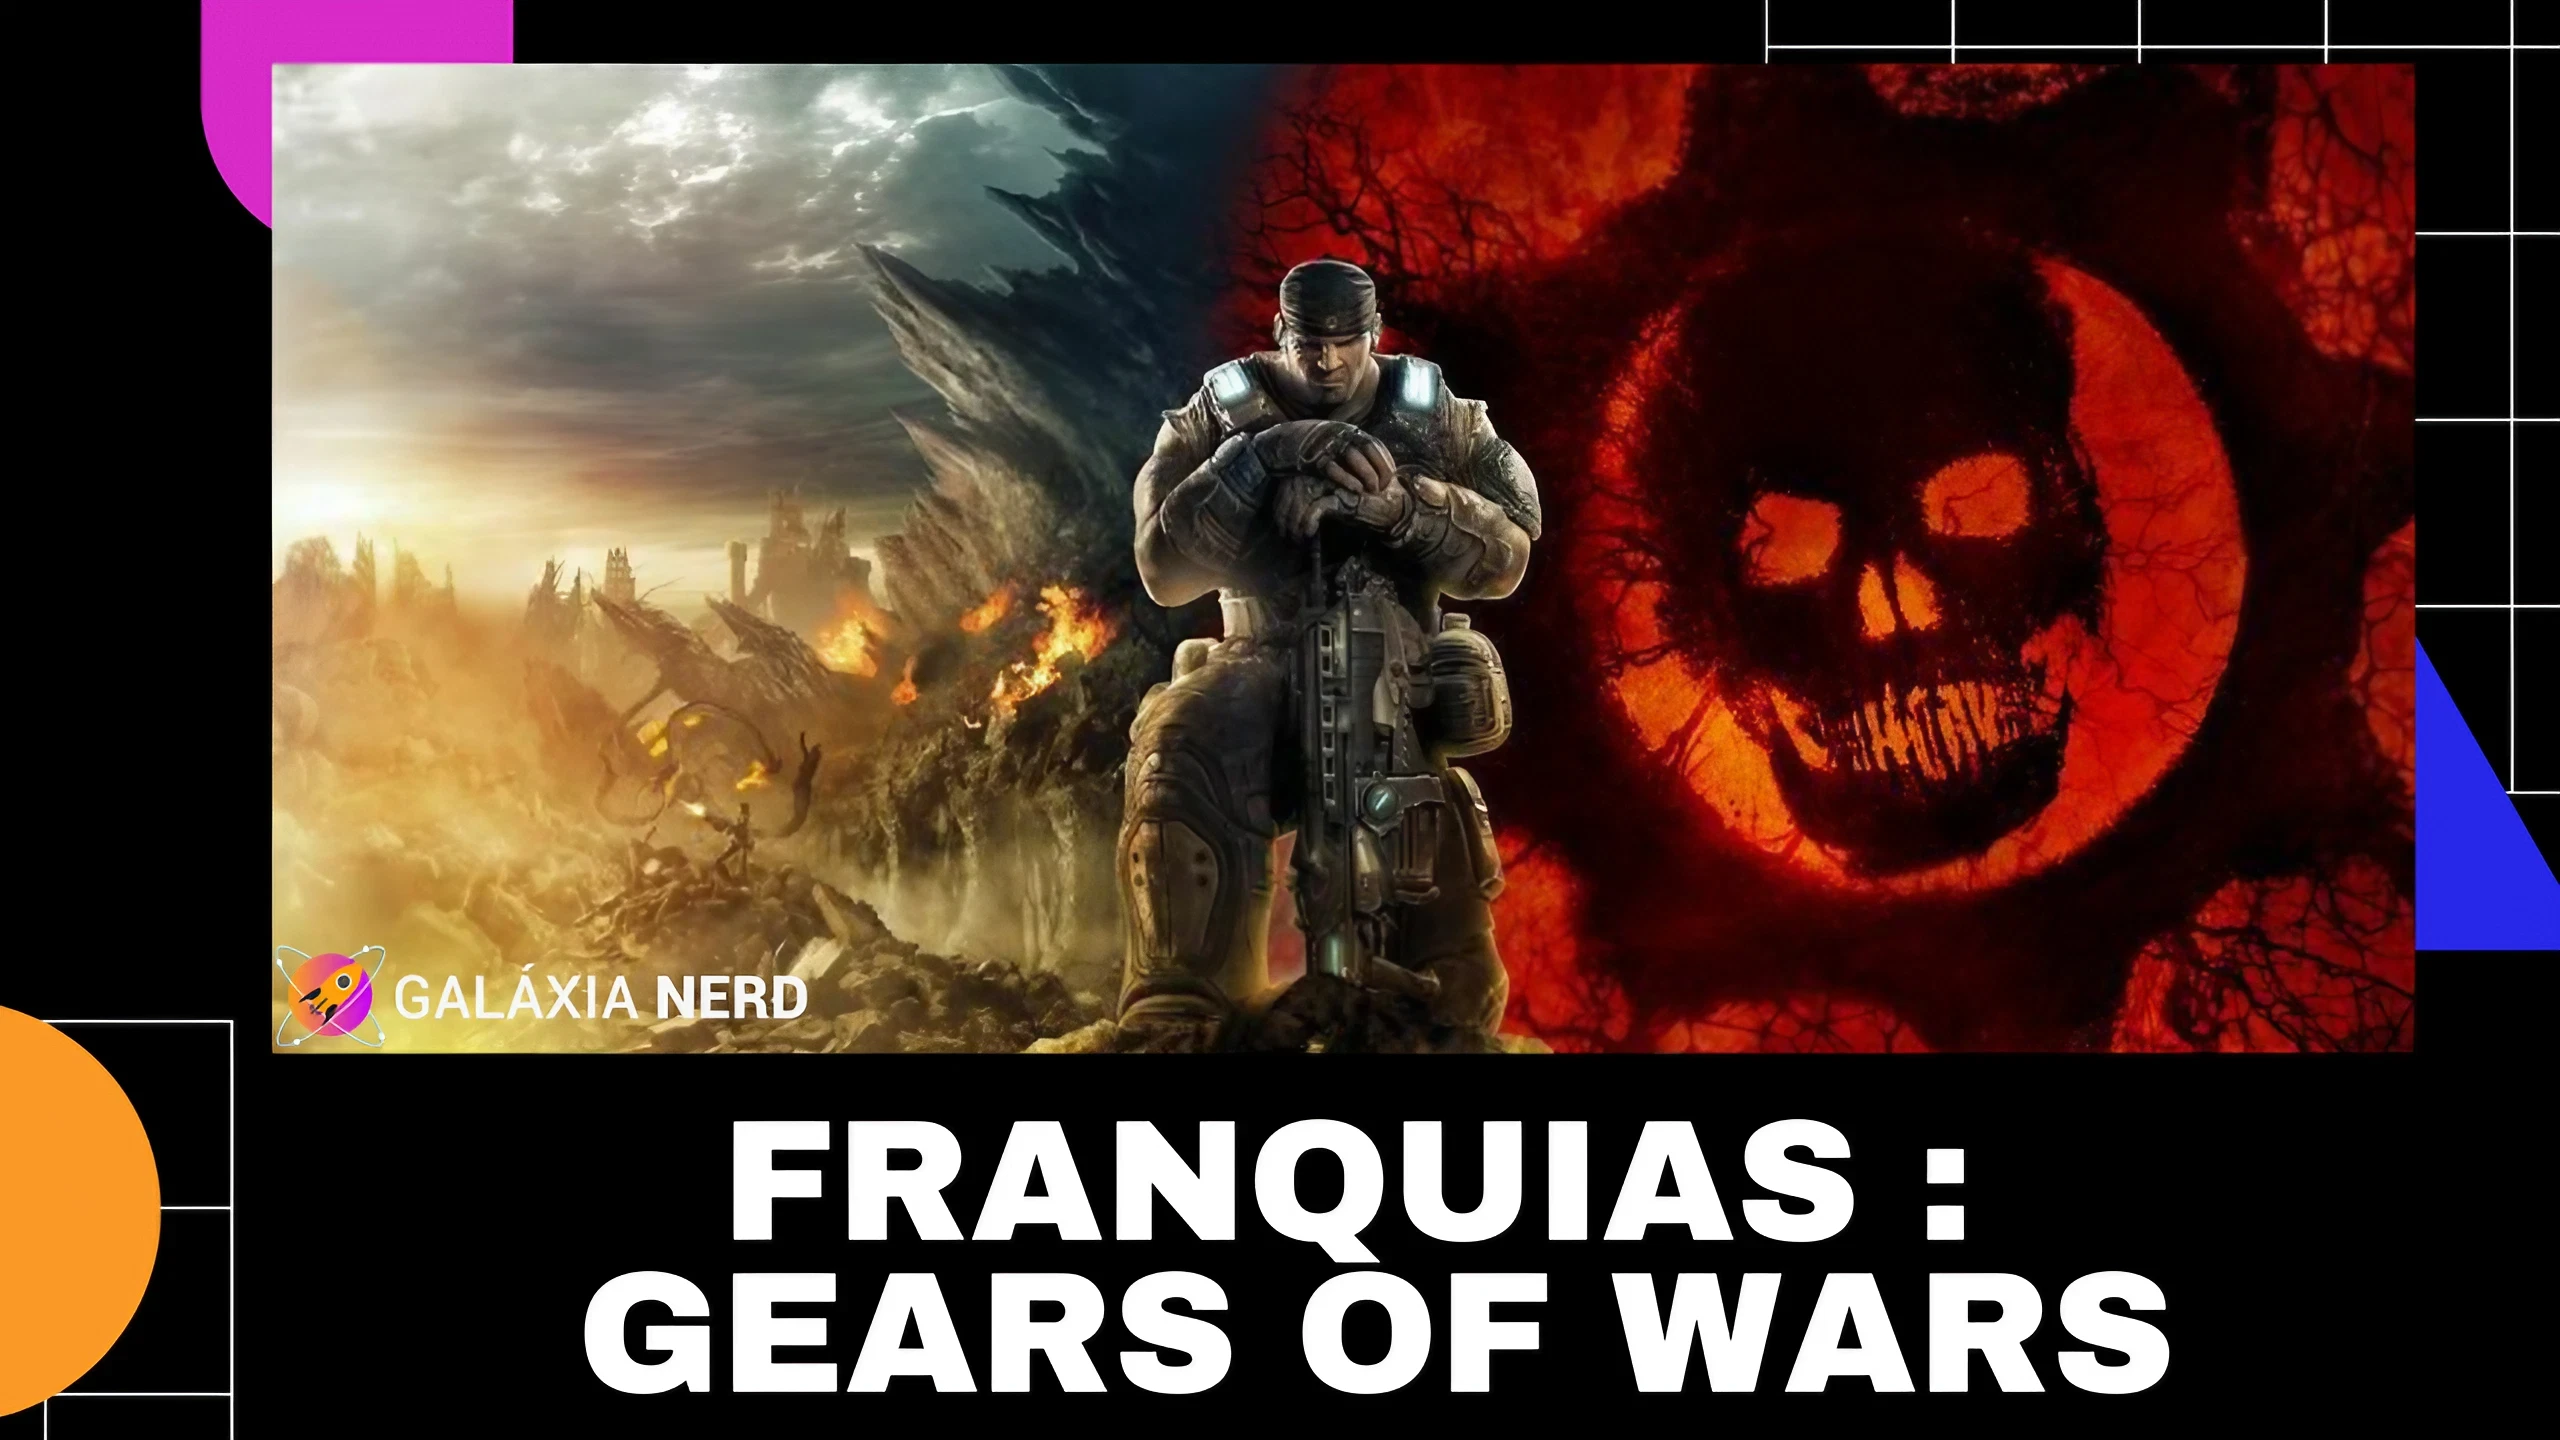 Franquias - Gears of Wars, um exclusivo que alavancou o Xbox 14